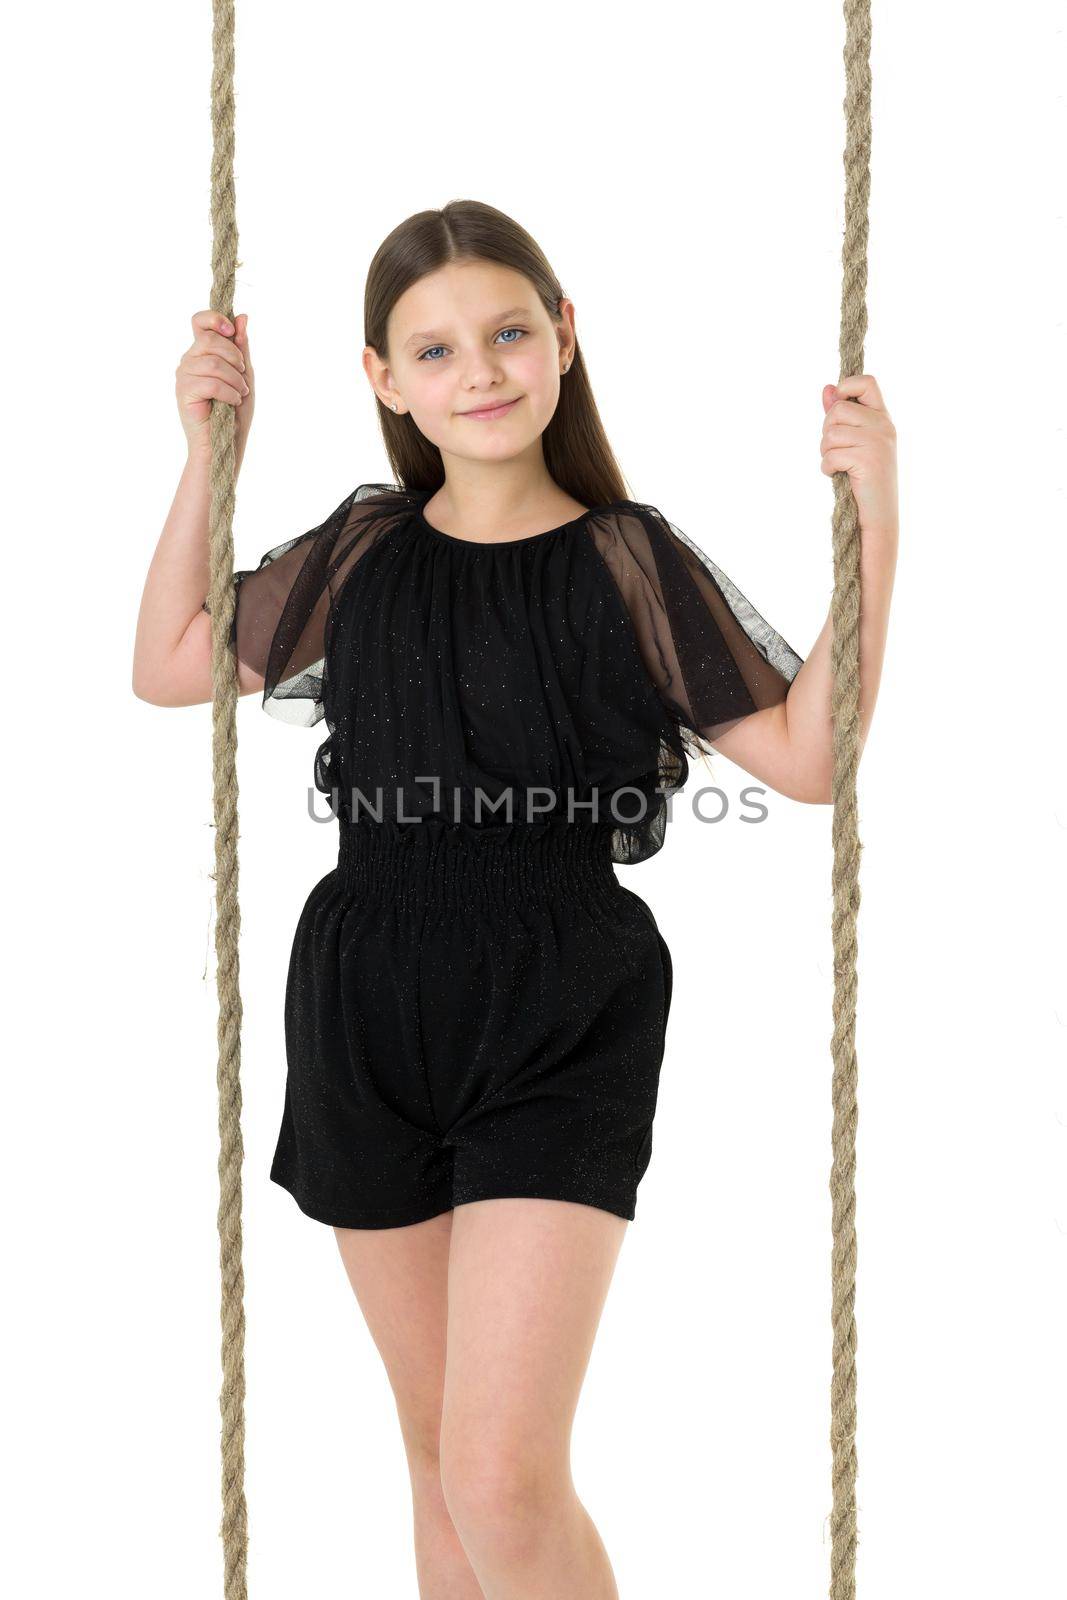 Joyful girl swinging on rope swing. In Stylish Jumpsuit